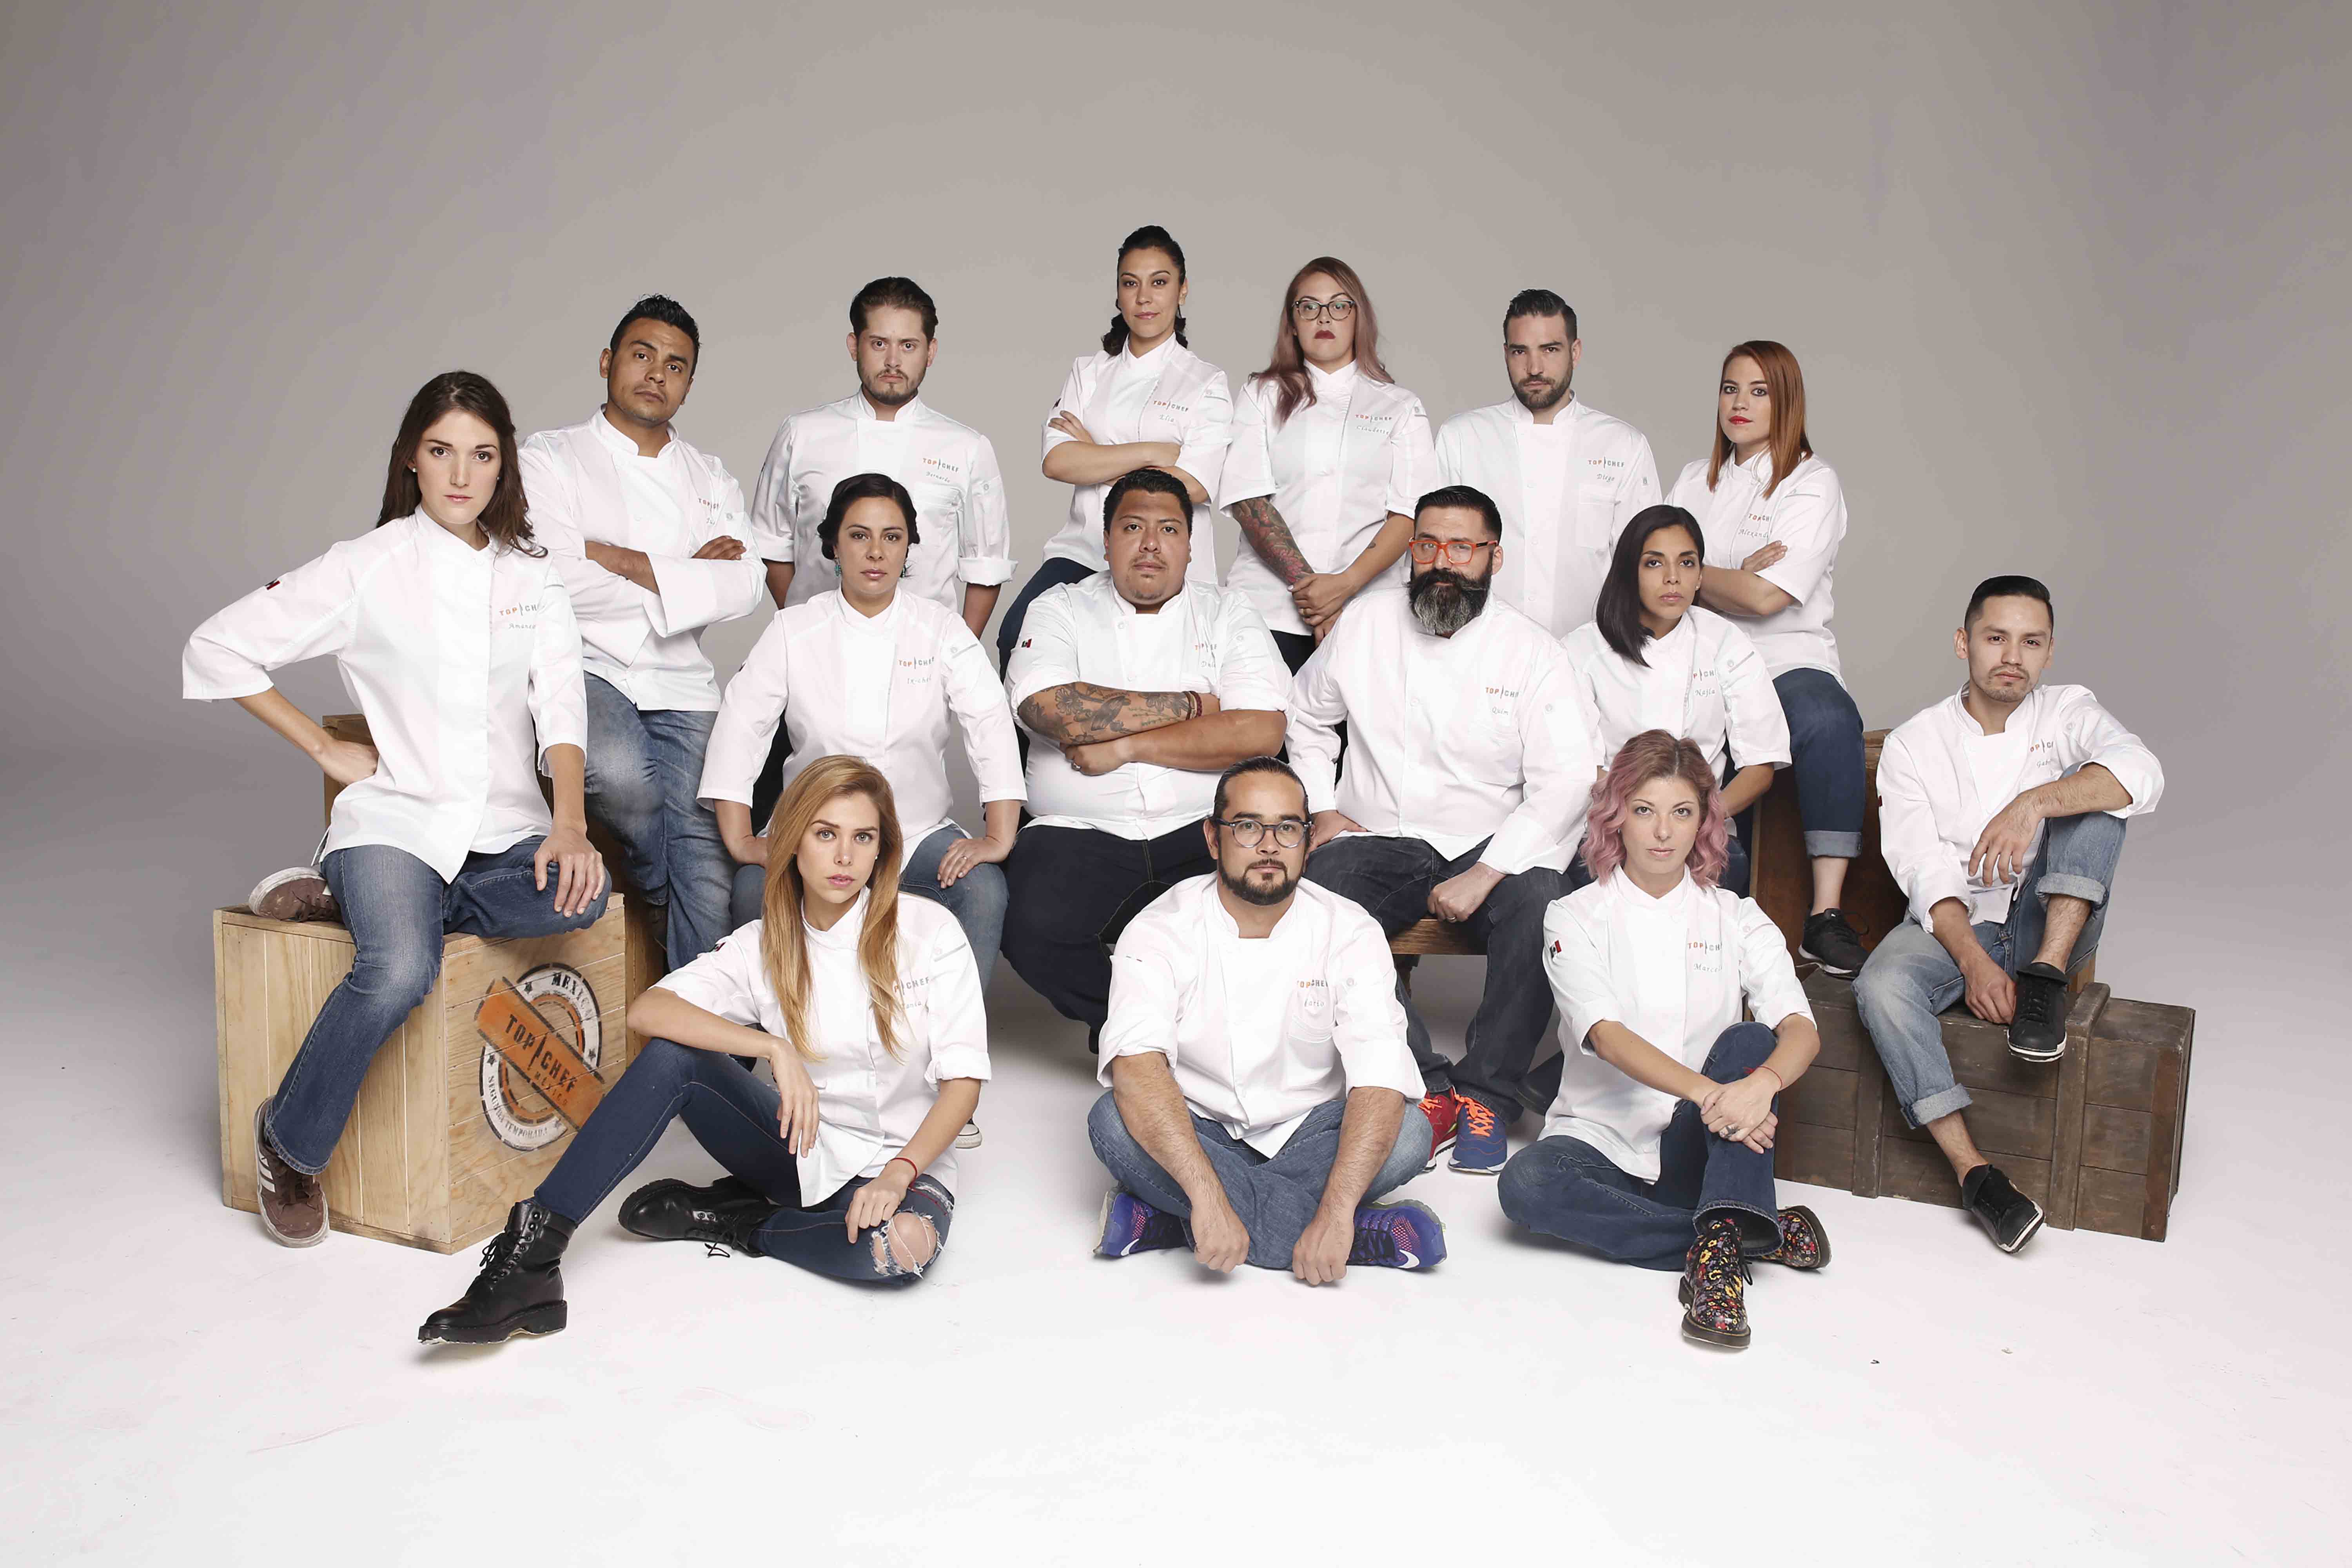 Vuelve Top Chef México con una exquisita segunda temporada Extensión